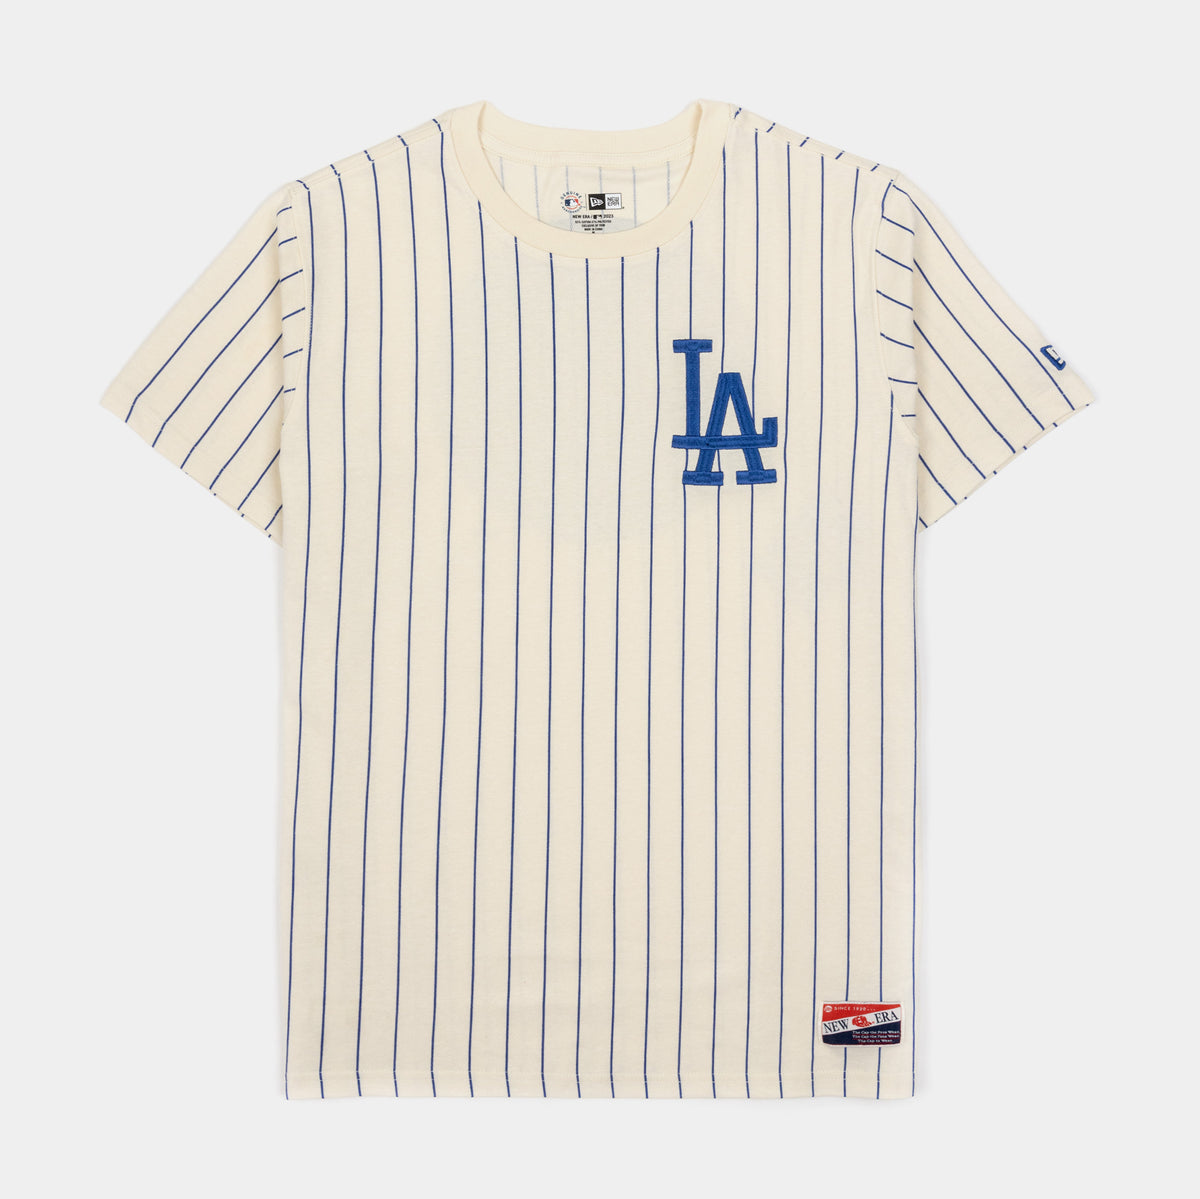 L.A. Dodgers T-Shirt, Dodgers Shirts, Dodgers Baseball Shirts